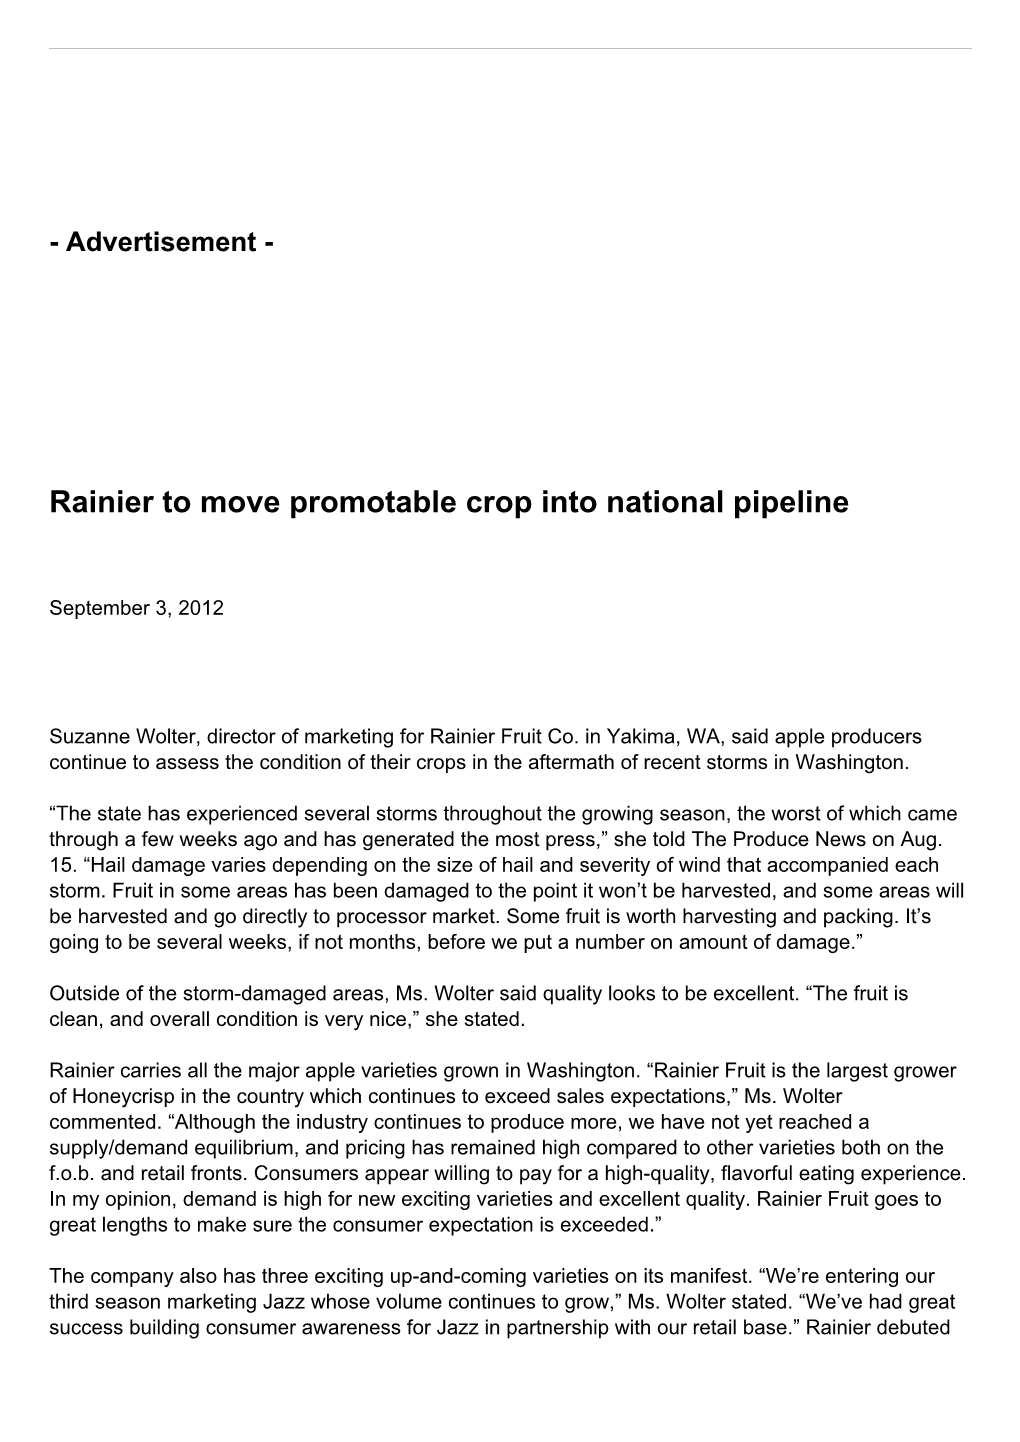 Rainier to Move Promotable Crop Into National Pipeline